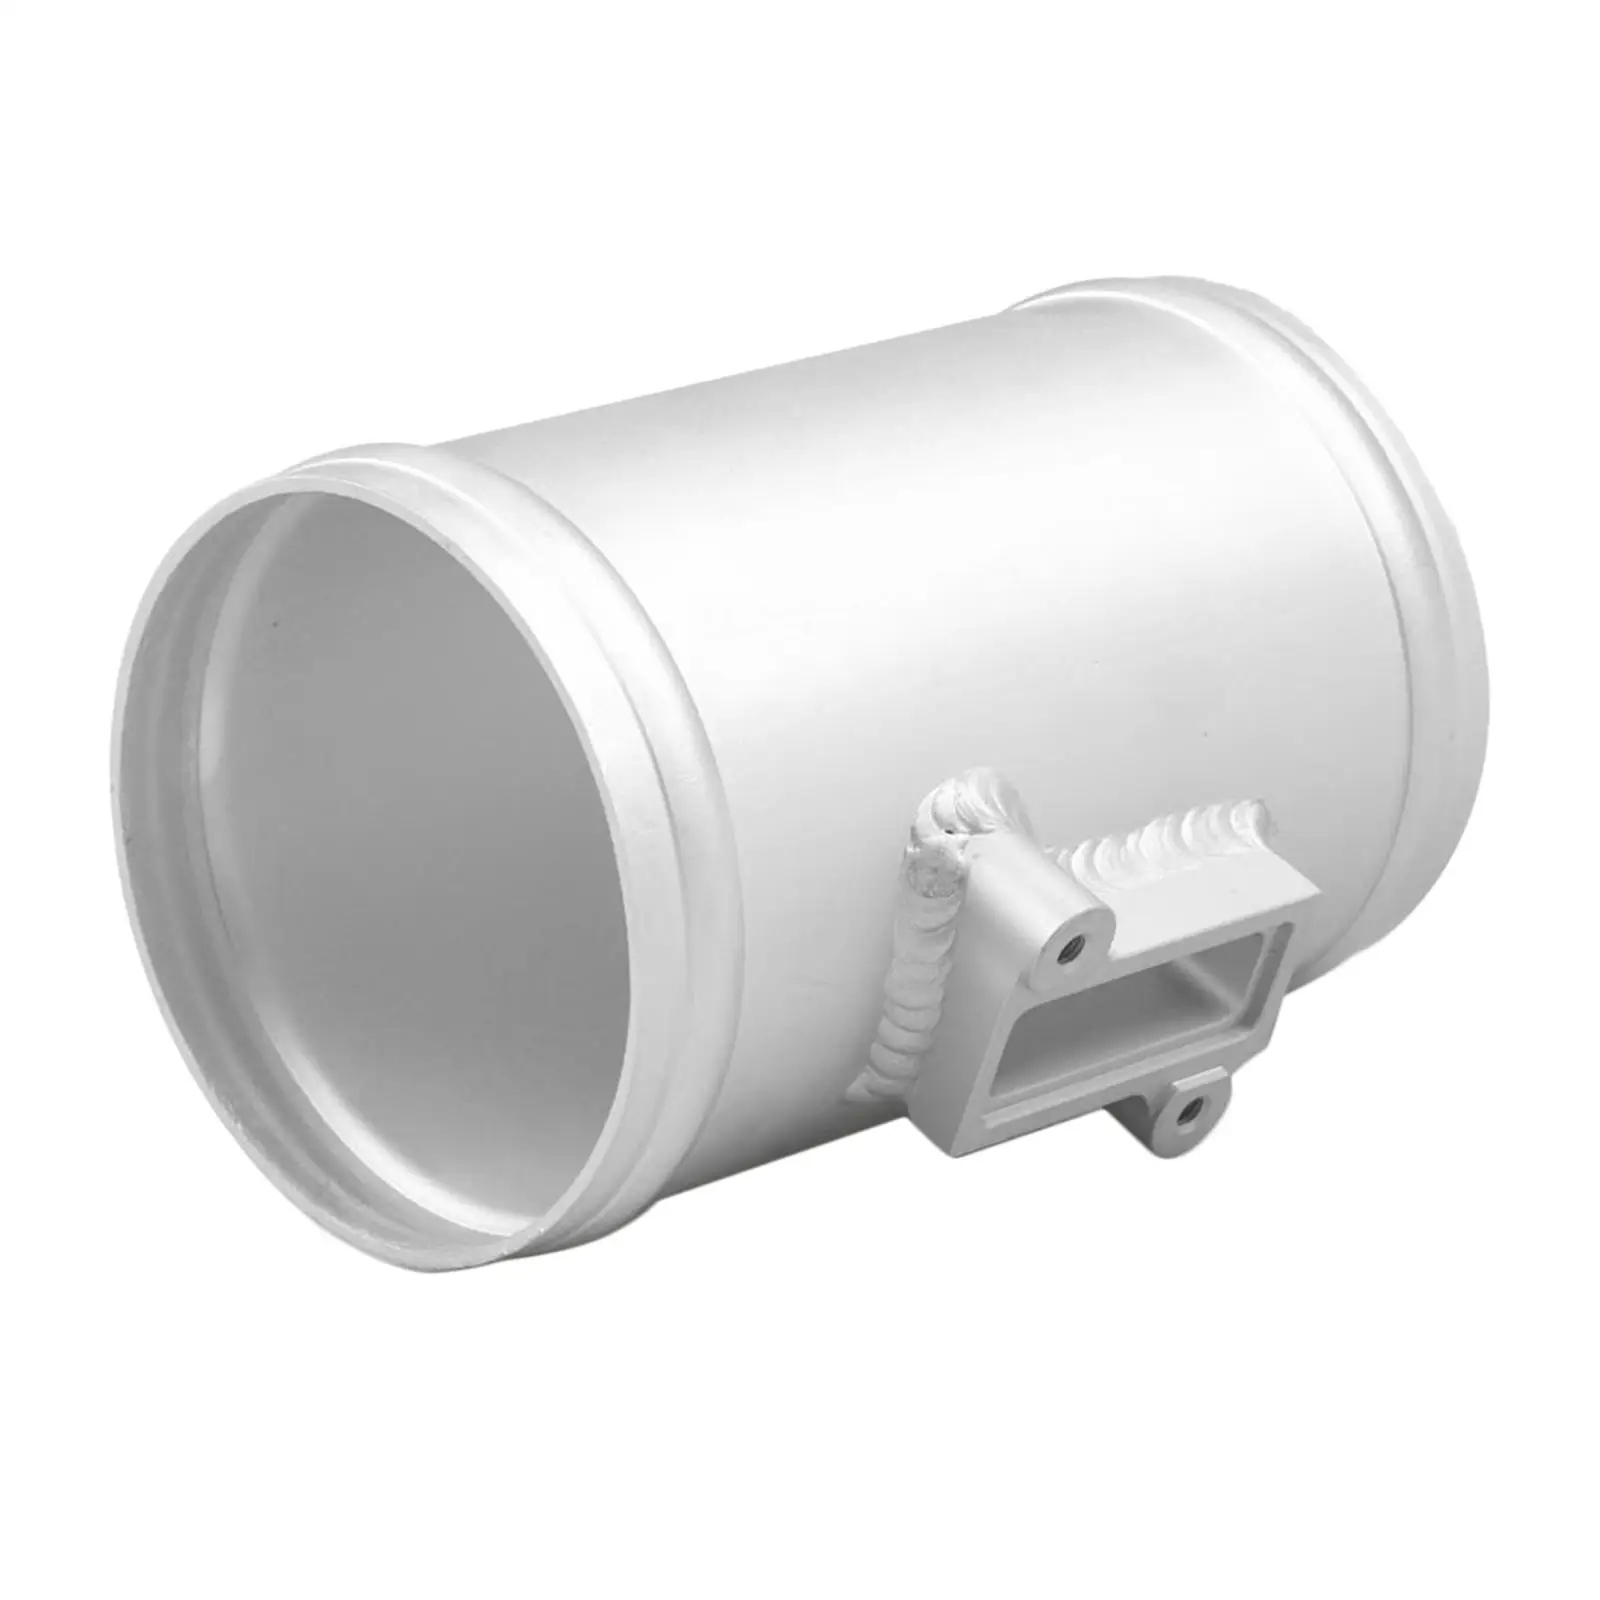 76mm Maf air Flow Sensor Adapter Tube Intake Meter mount Universal